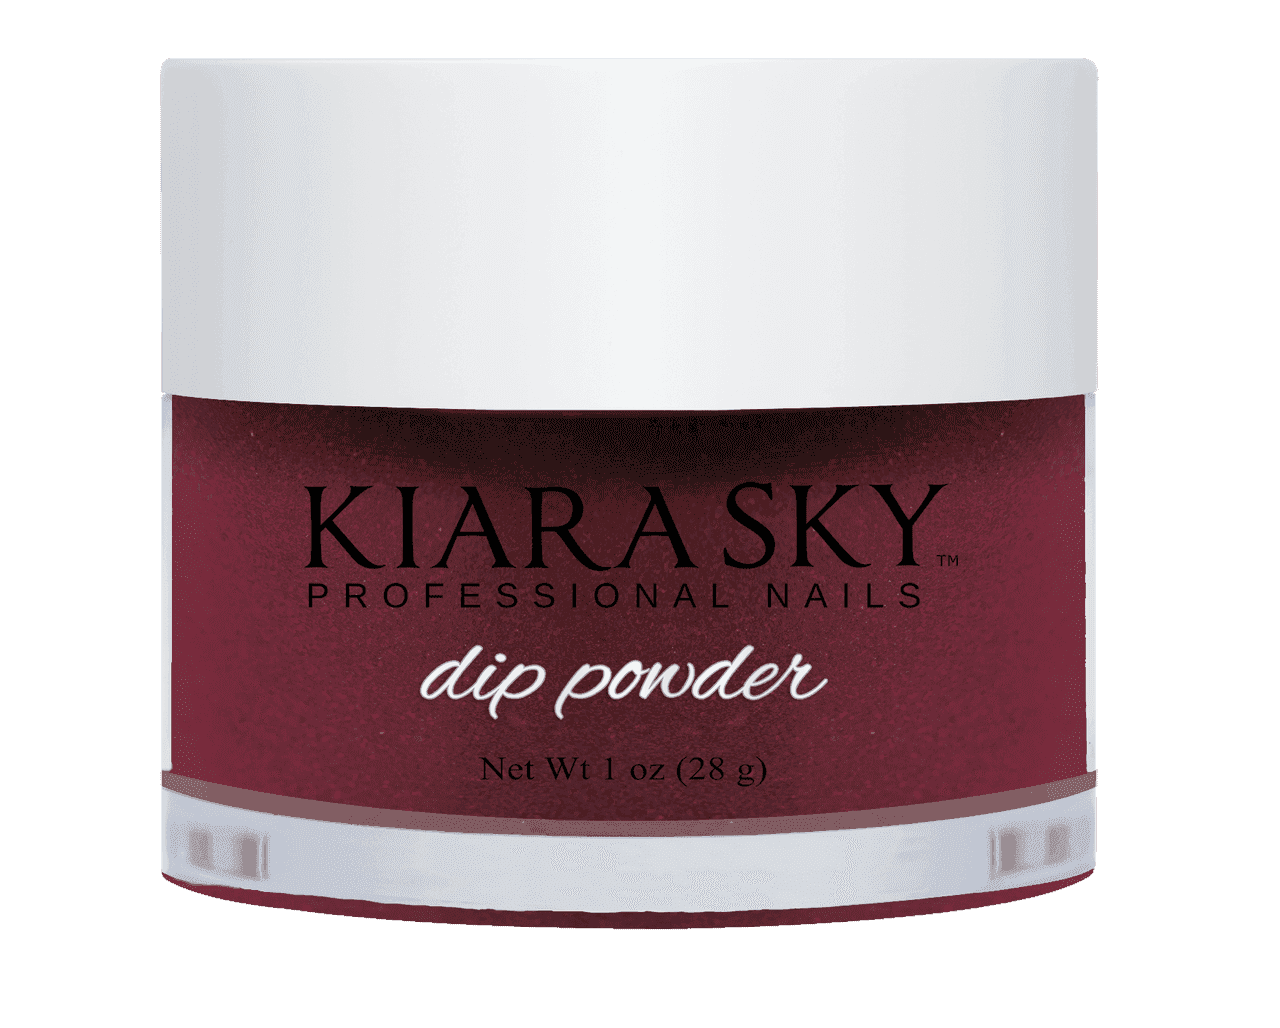 Kiara Sky Dip Powder - D426 FIREBALL